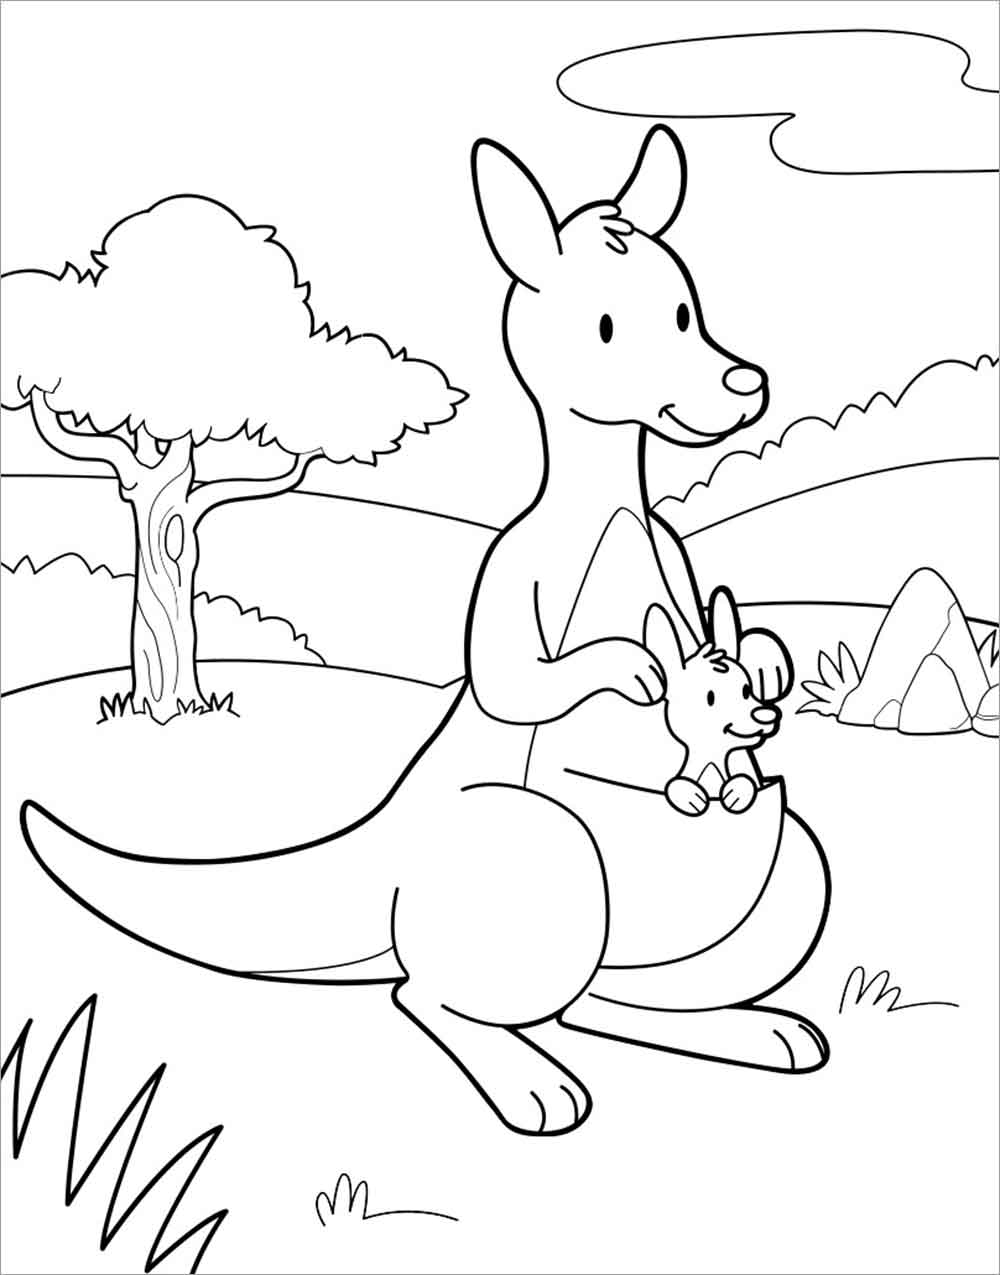 Kangaroo Moms and Baby Coloring Page